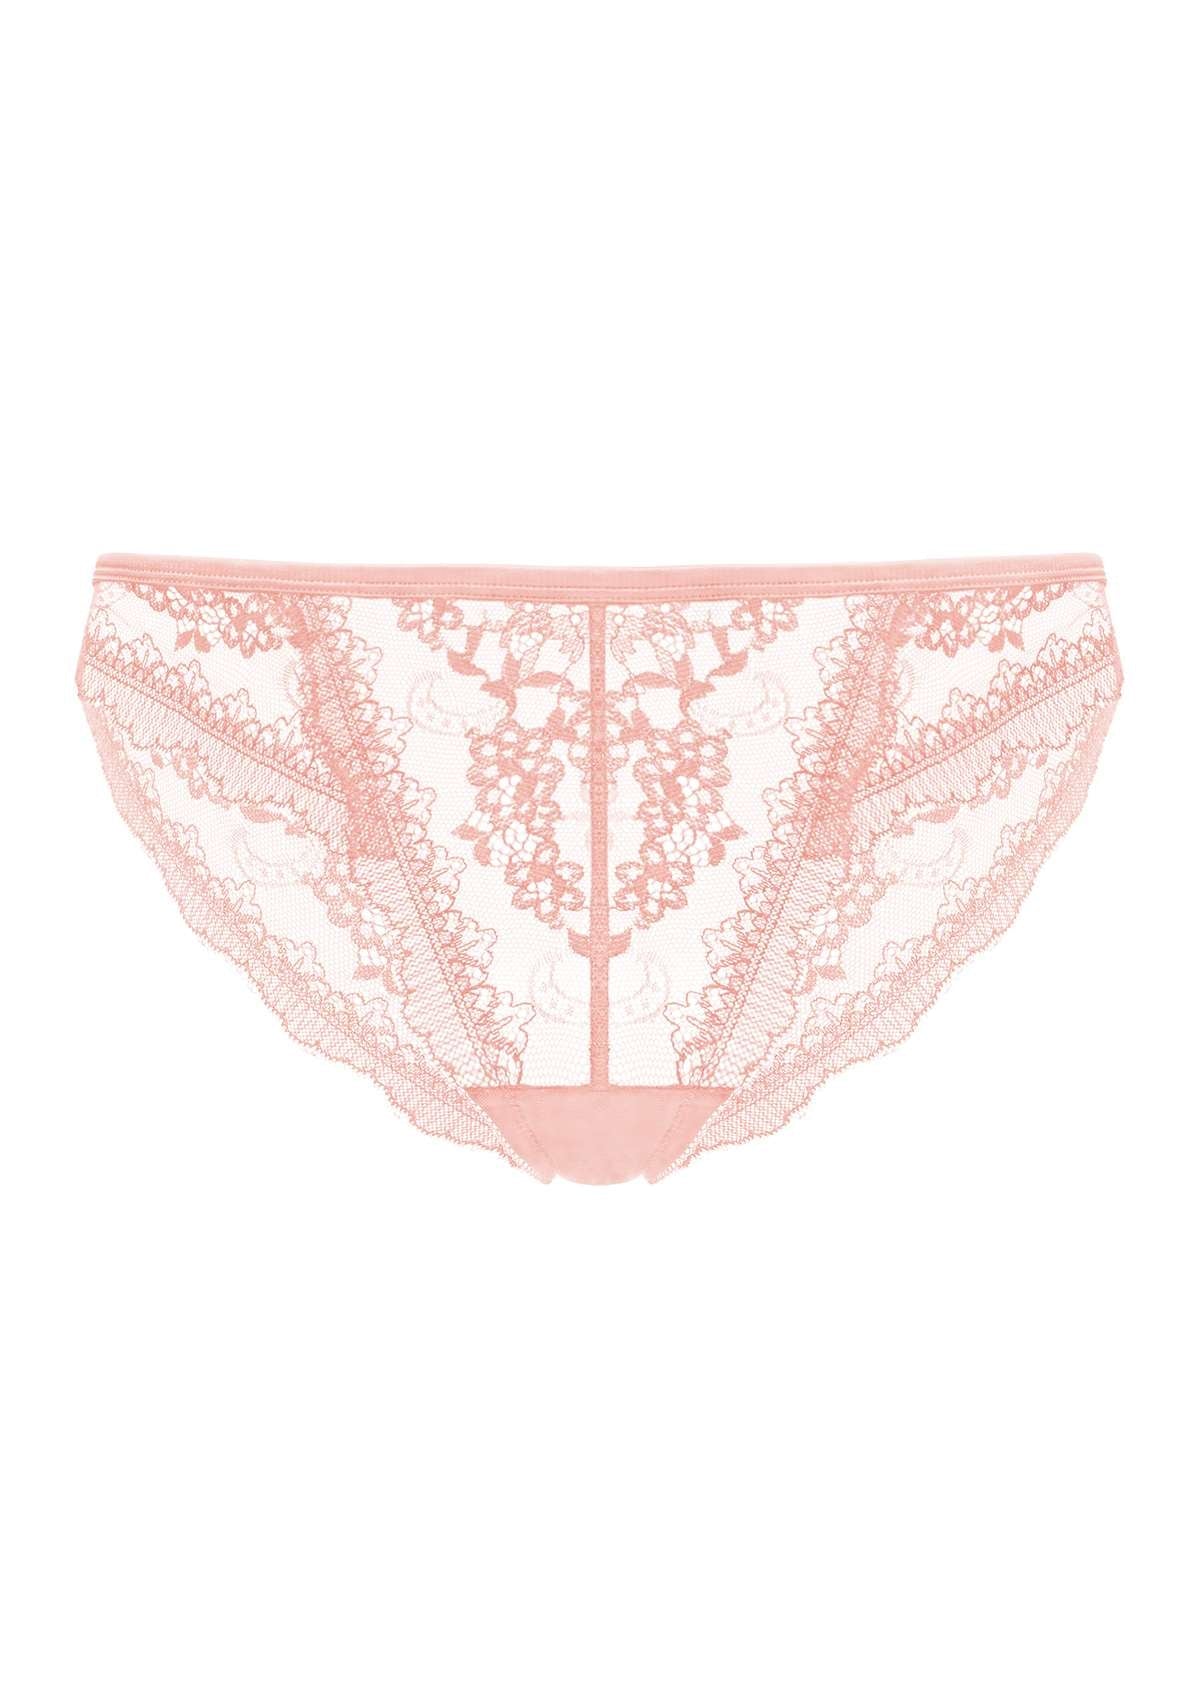 HSIA Floral Bridal Intricate All-Over Lace Romantic Bikini Underwear - Pink / L